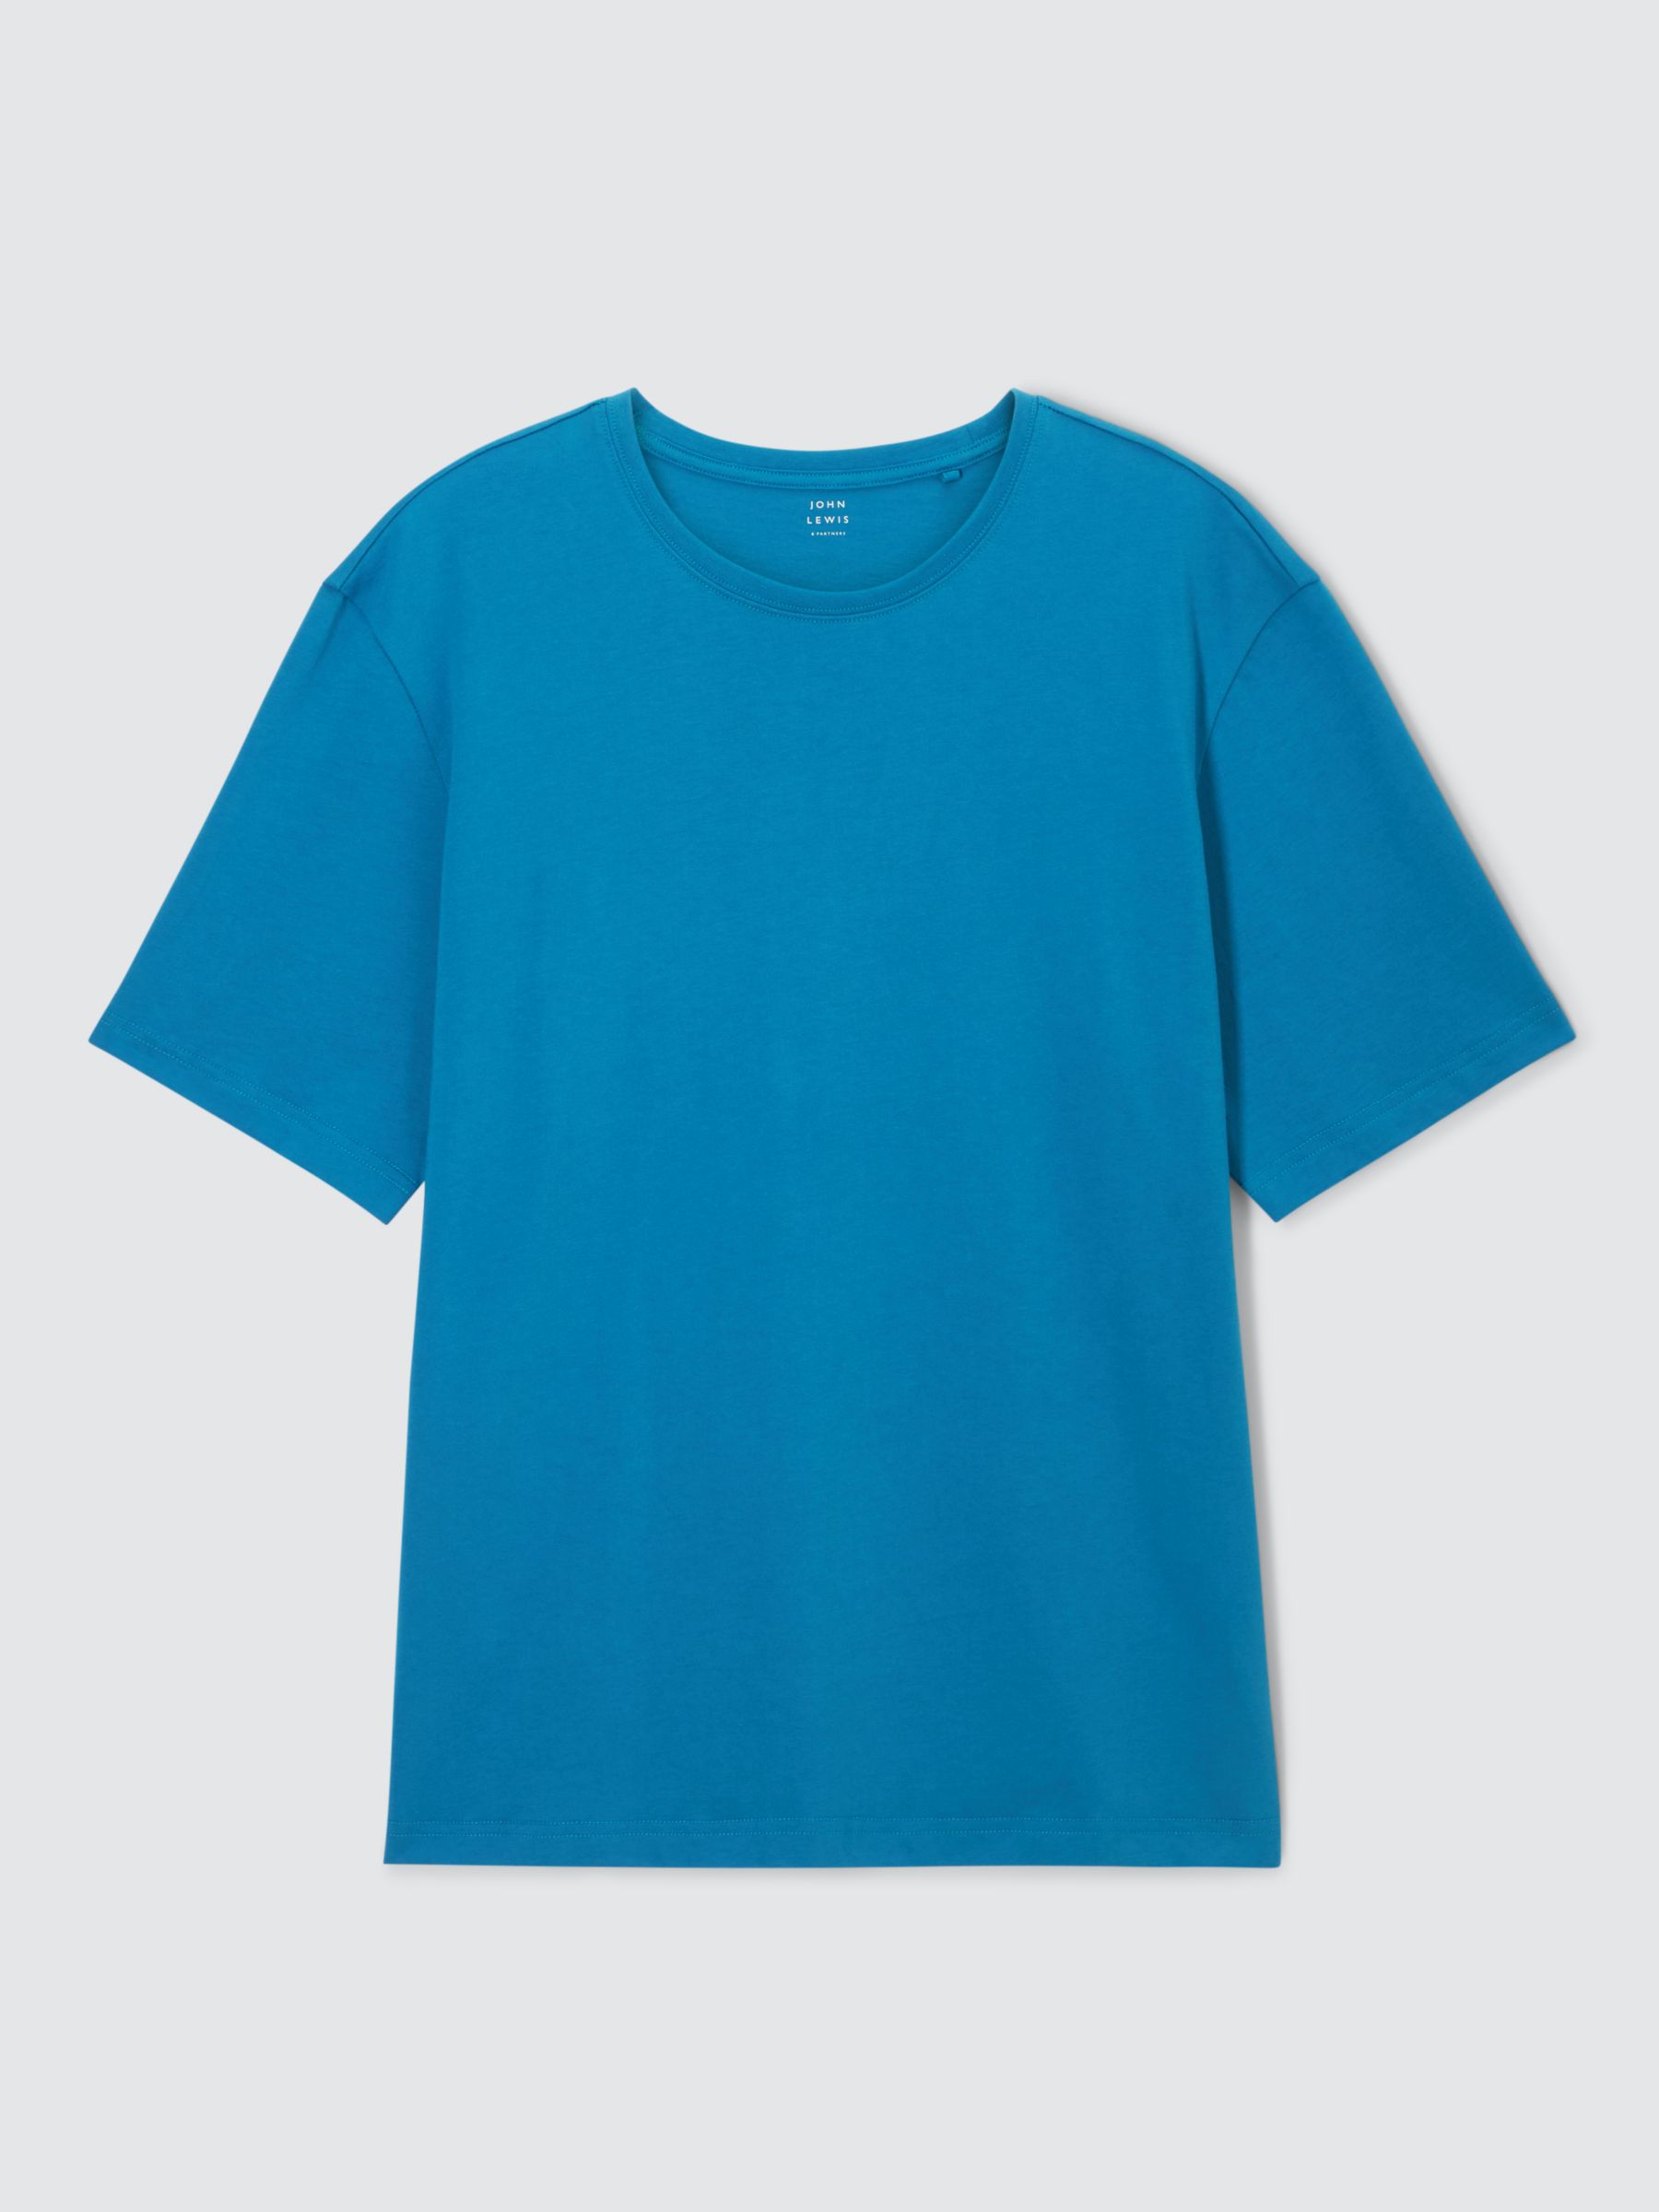 John Lewis Short Sleeve Crew Neck T-Shirt, Blue, XL